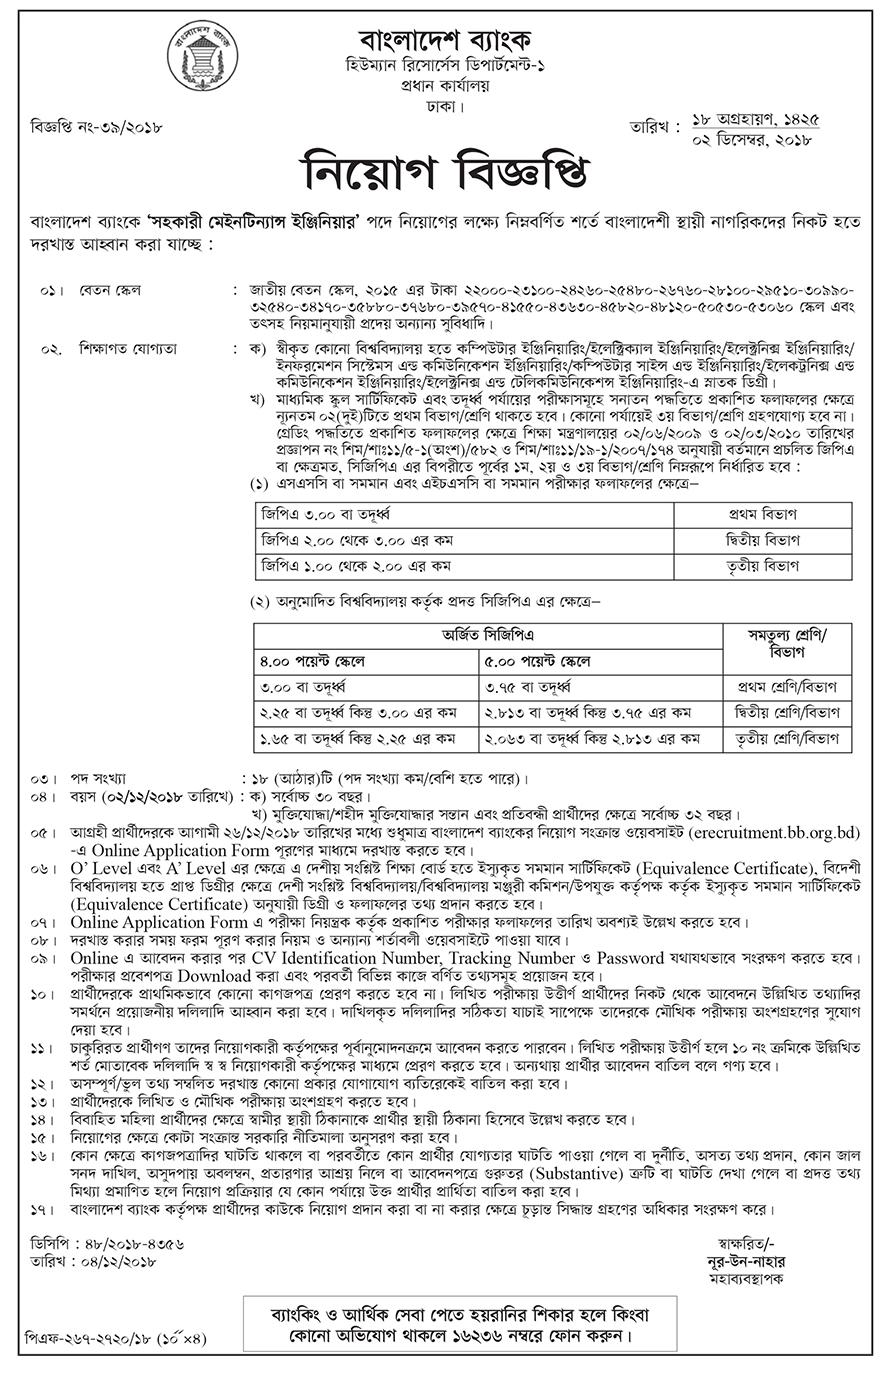 Bangladesh Bank (BB) Assistant Maintenance Engineer Job Circular 2018